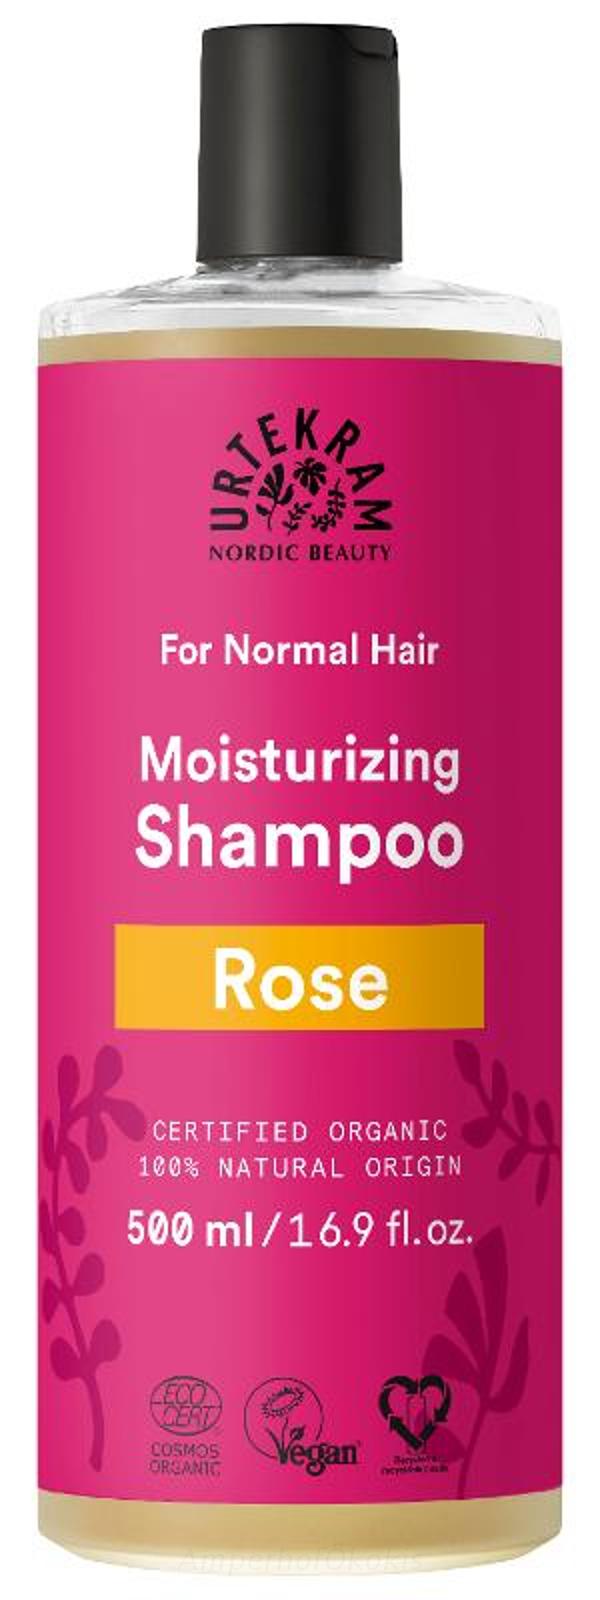 Produktfoto zu Shampoo Rose 500 ml